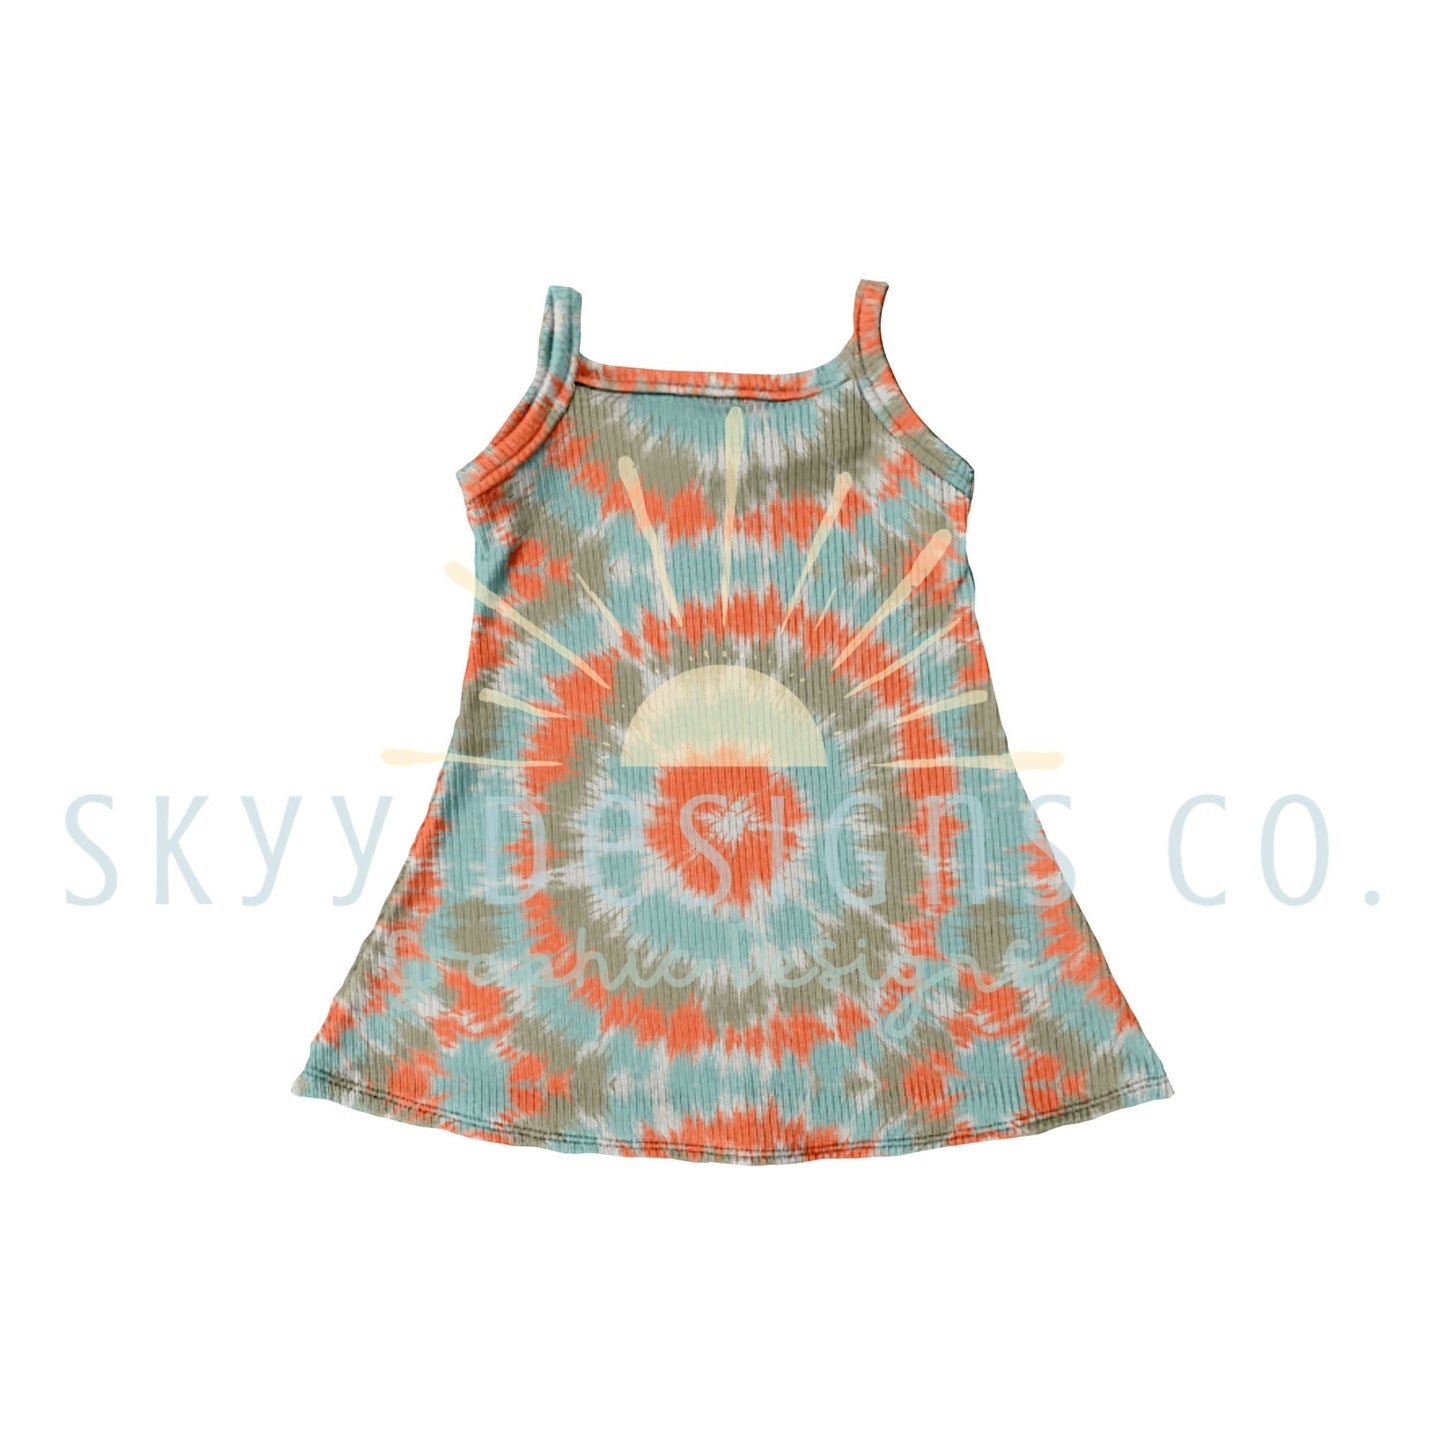 Tank top dress mock-up template - SkyyDesignsCo